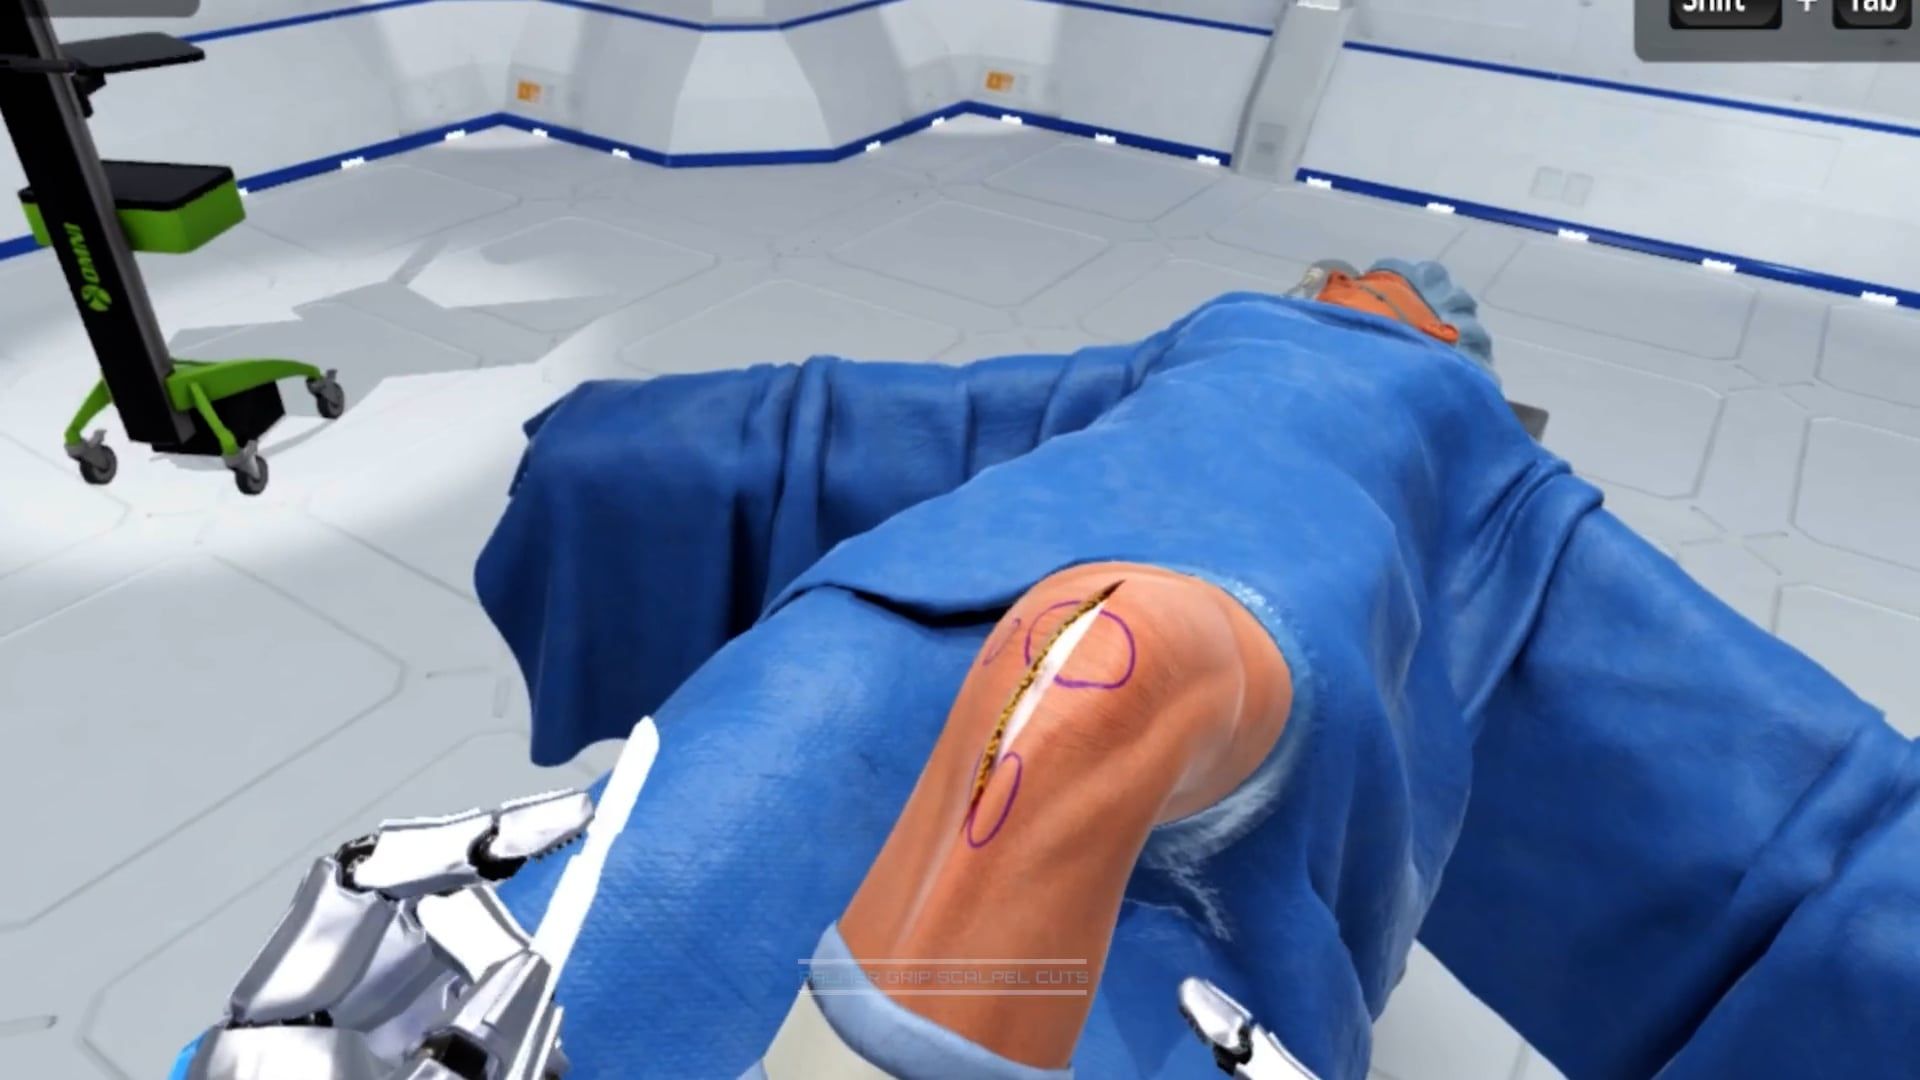 Wraith-VR - Surgical VR Simulations for Medical Device Demos - No Sound